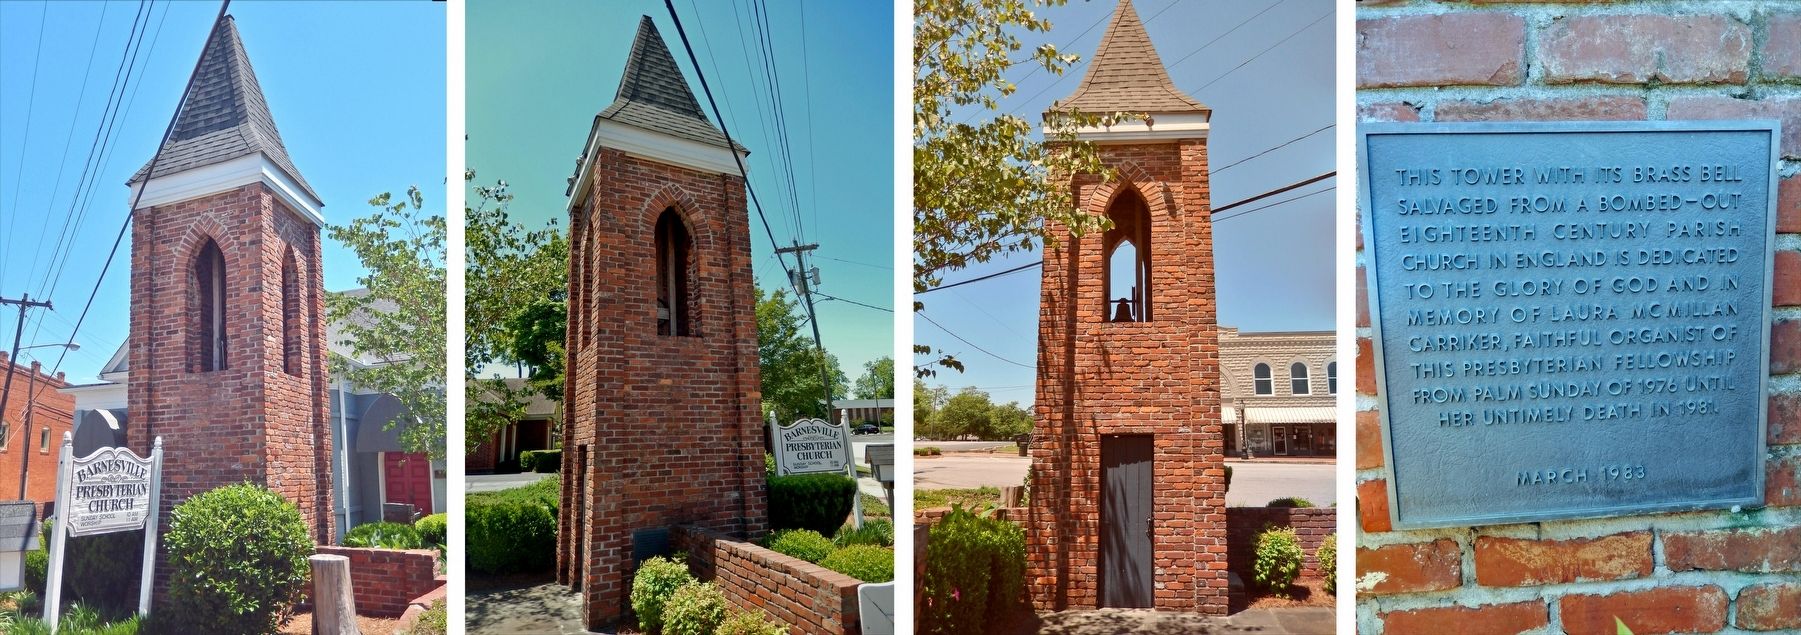 Barnesville Presbyterian Church Memorial Bell Tower image. Click for full size.